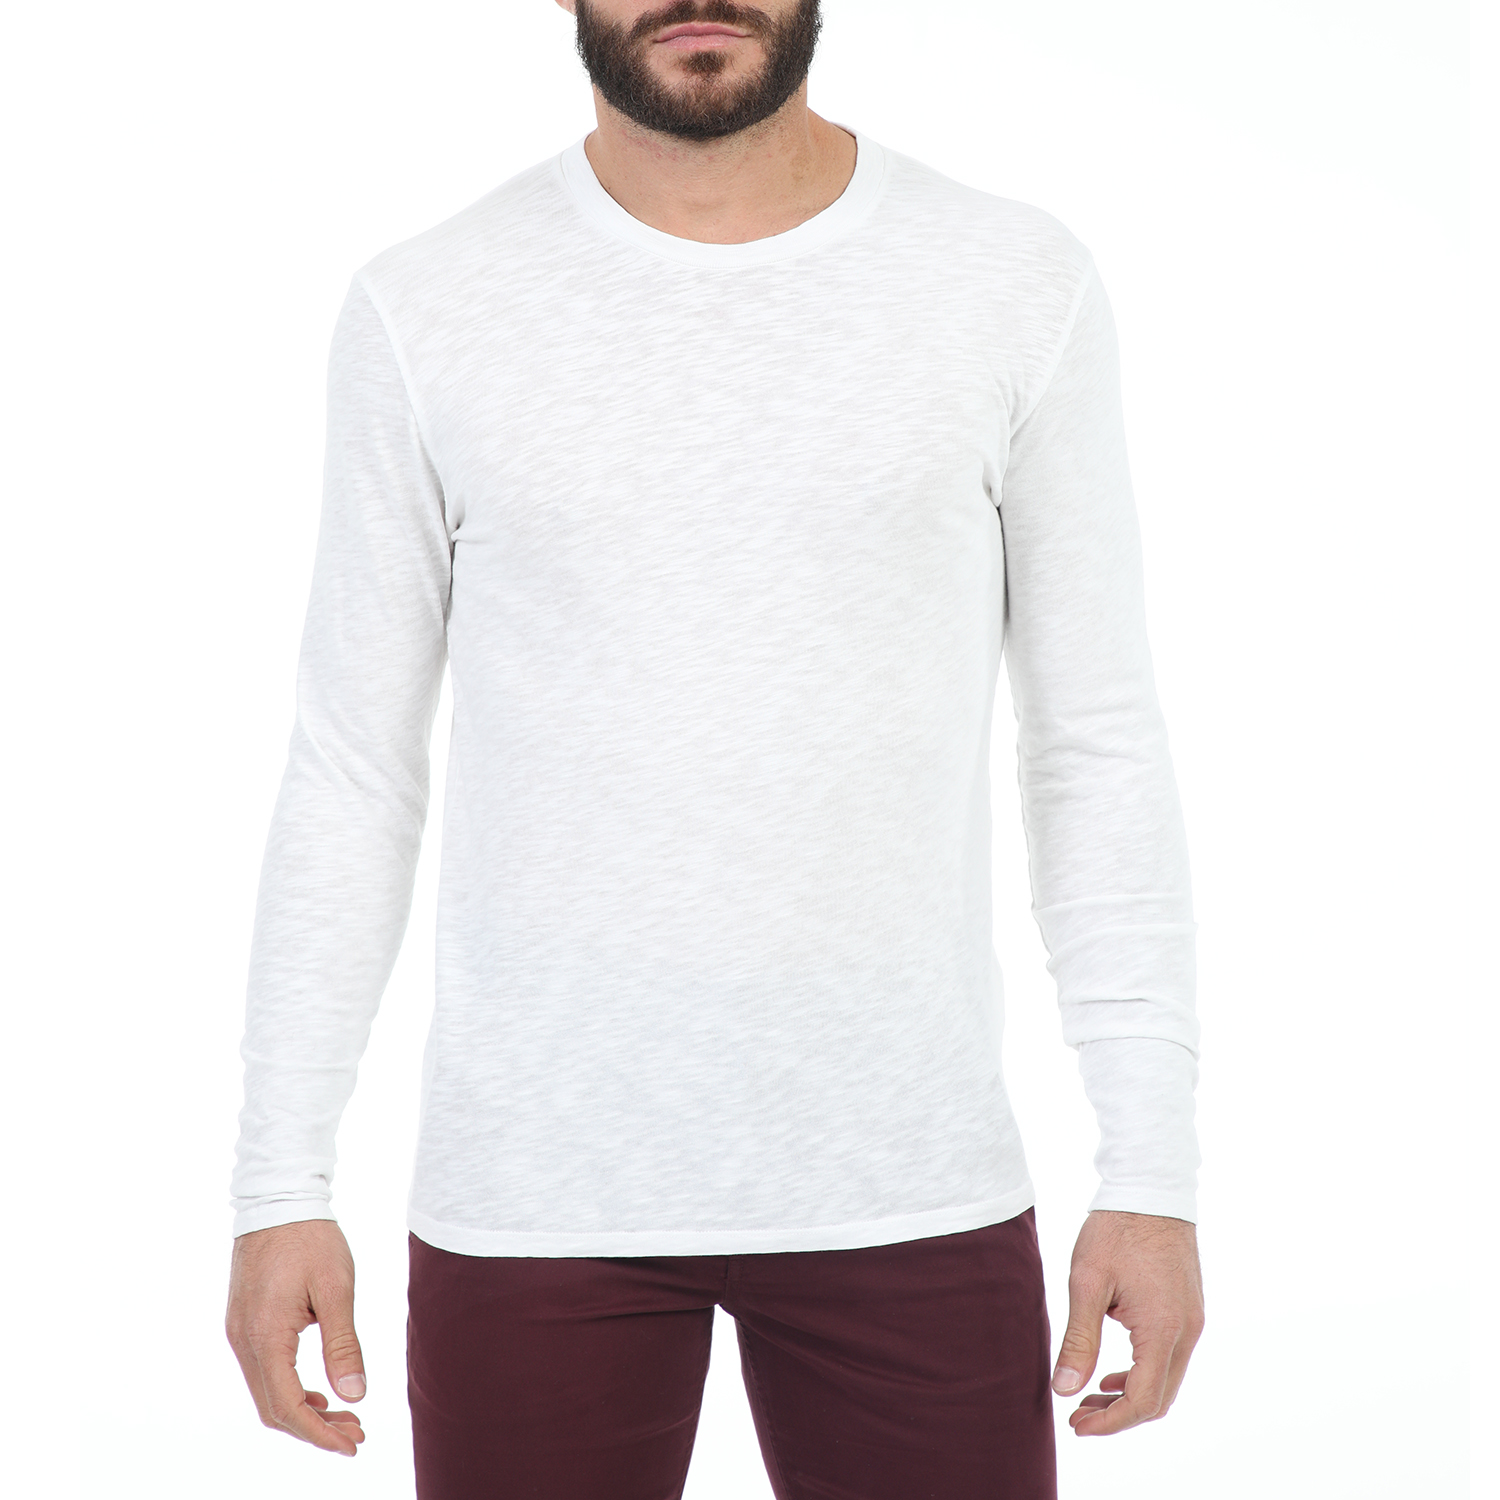 AMERICAN VINTAGE - Ανδρική μακρυμάνικη μπλούζα AMERICAN VINTAGE λευκή Ανδρικά/Ρούχα/Μπλούζες/Μακρυμάνικες